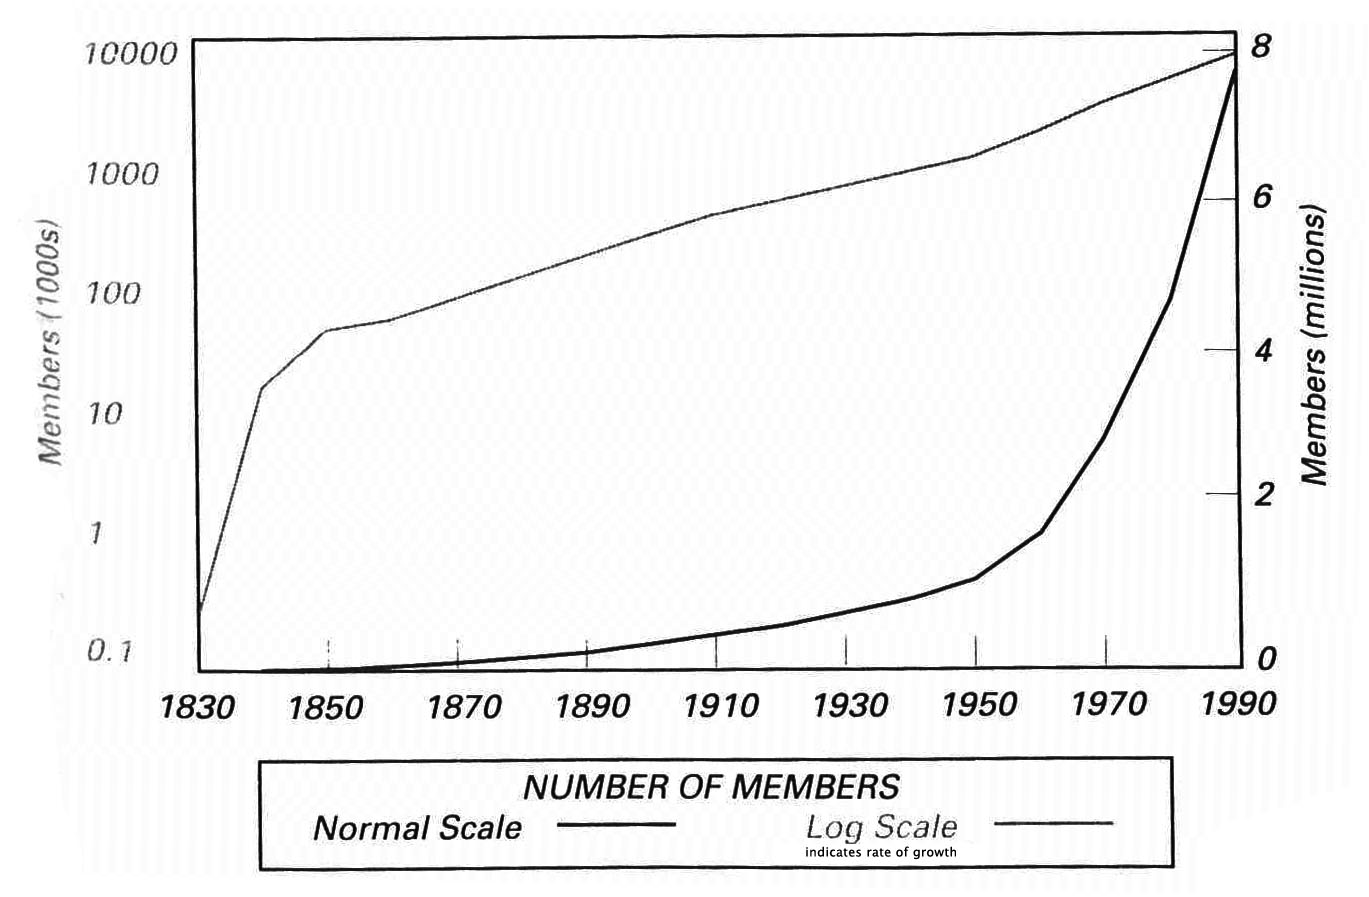 Growth in Total Membership